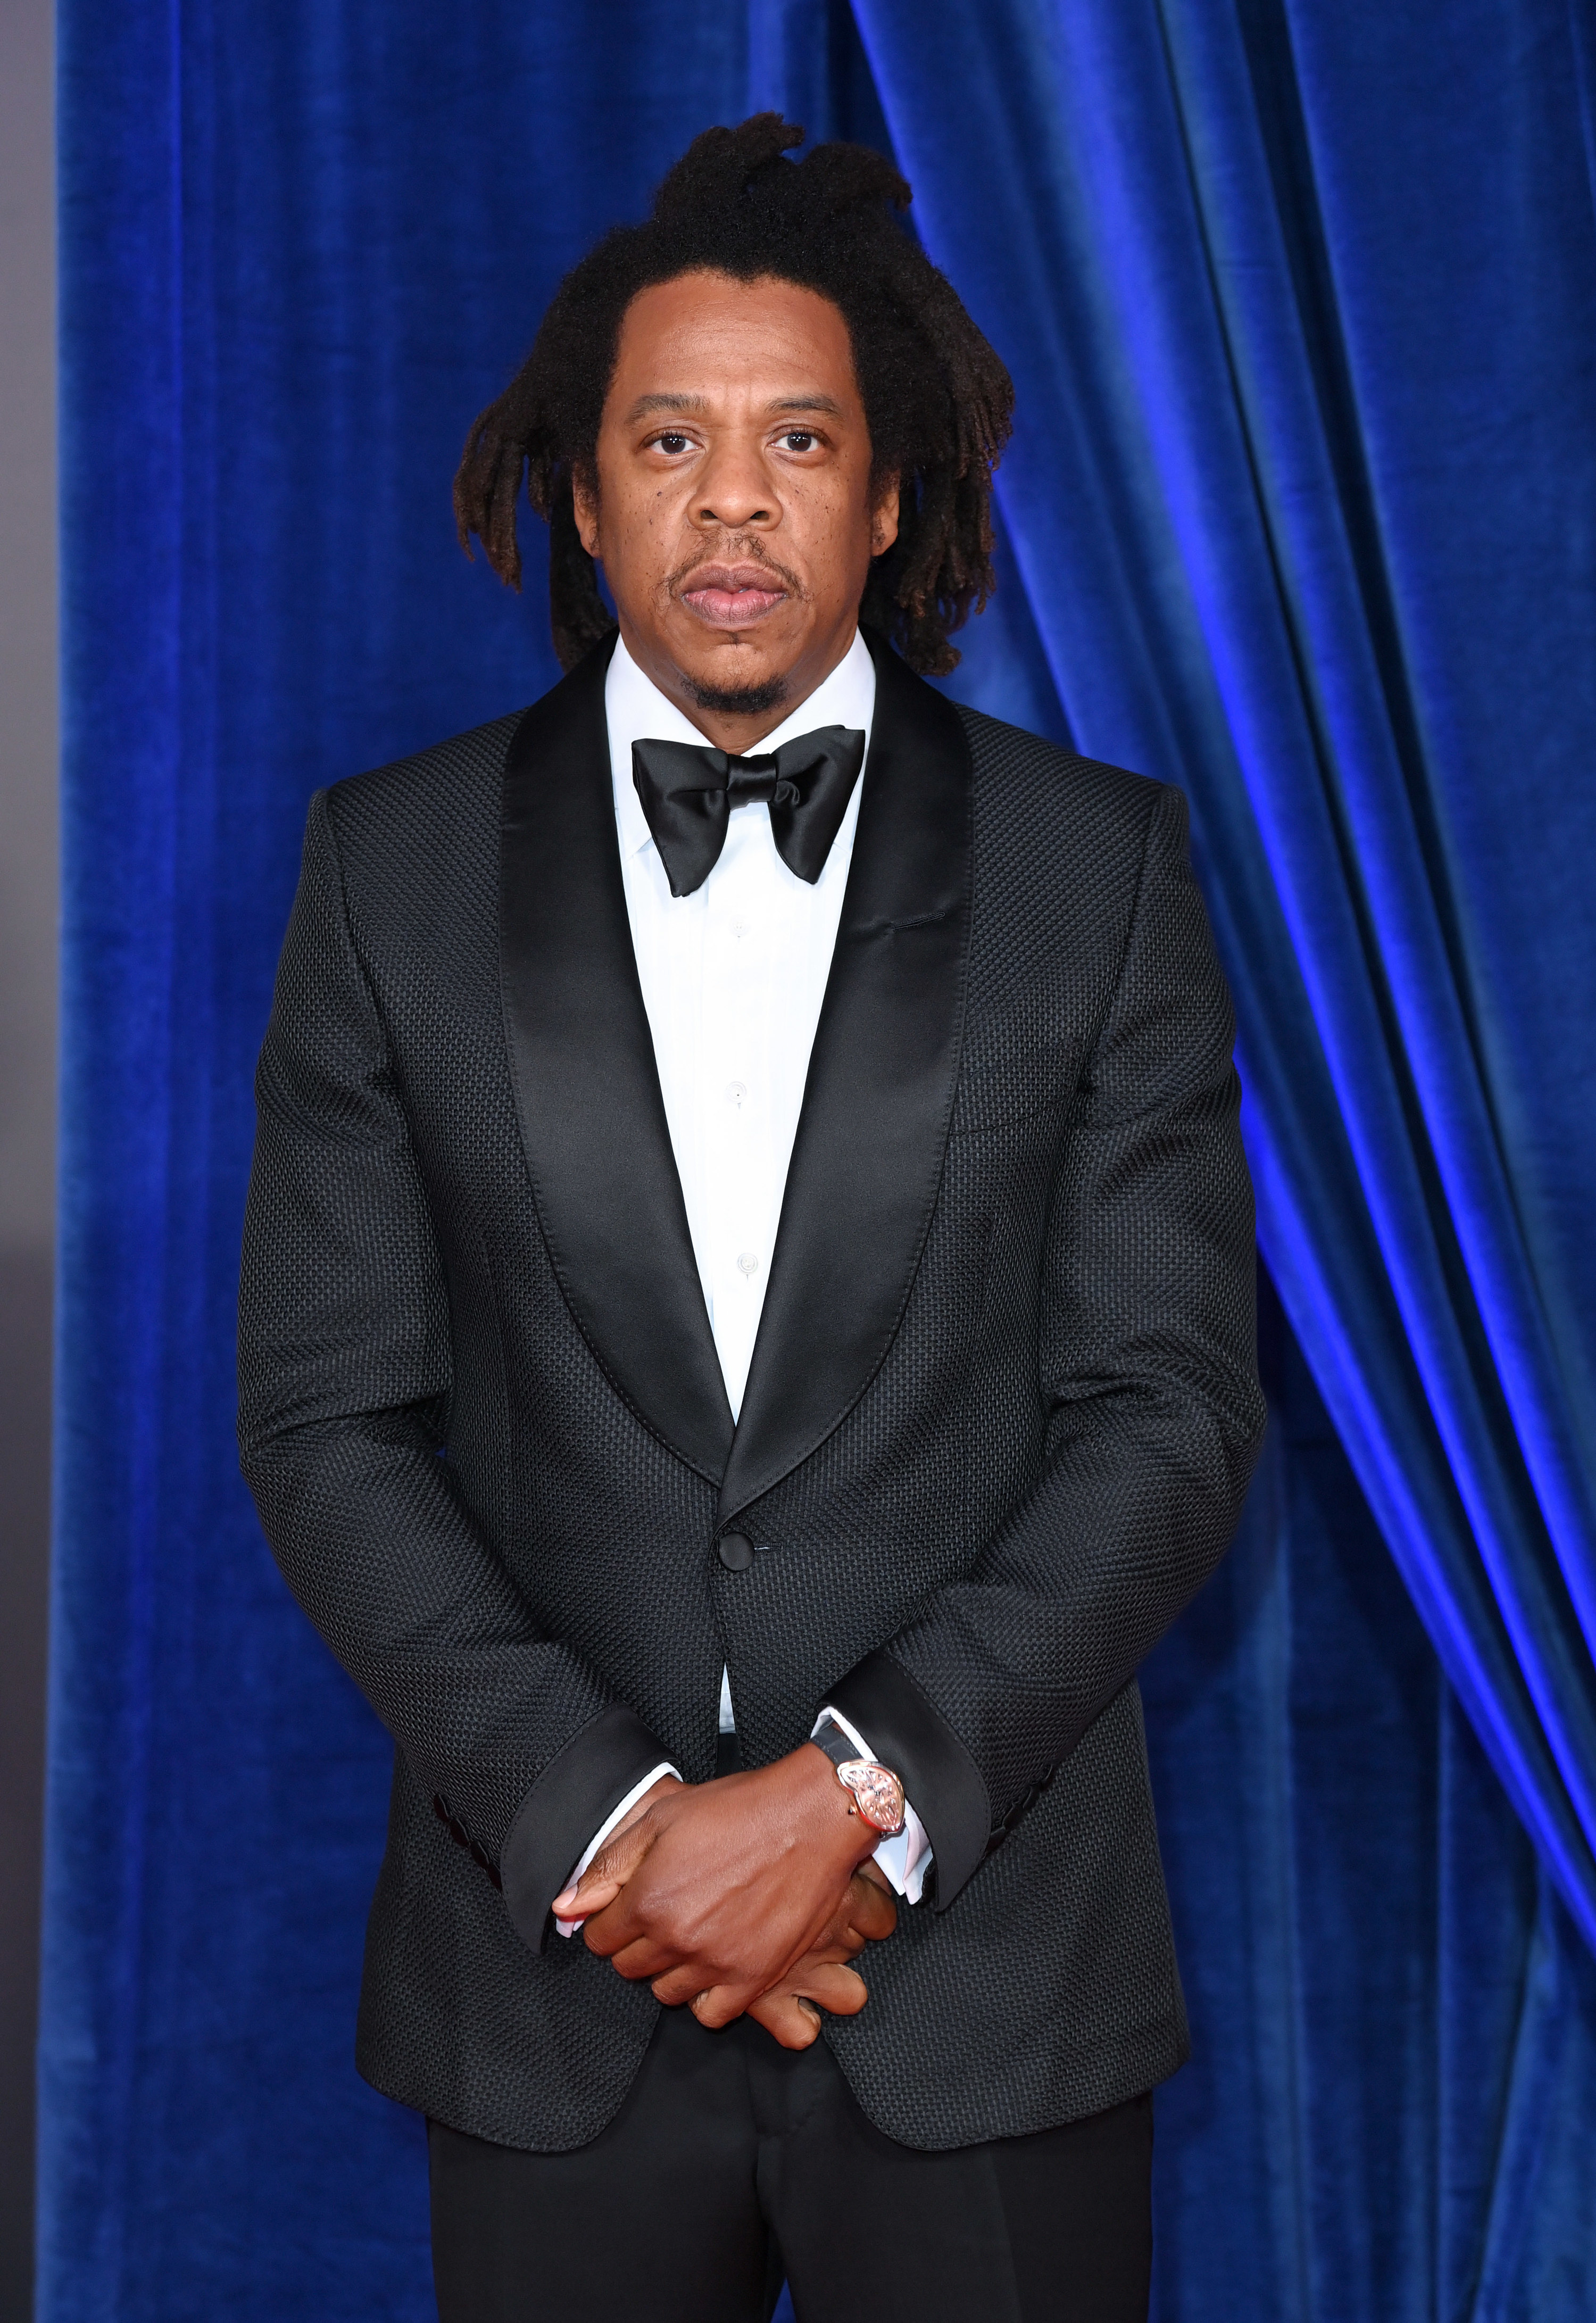 cloeup of Jay-Z in a suit